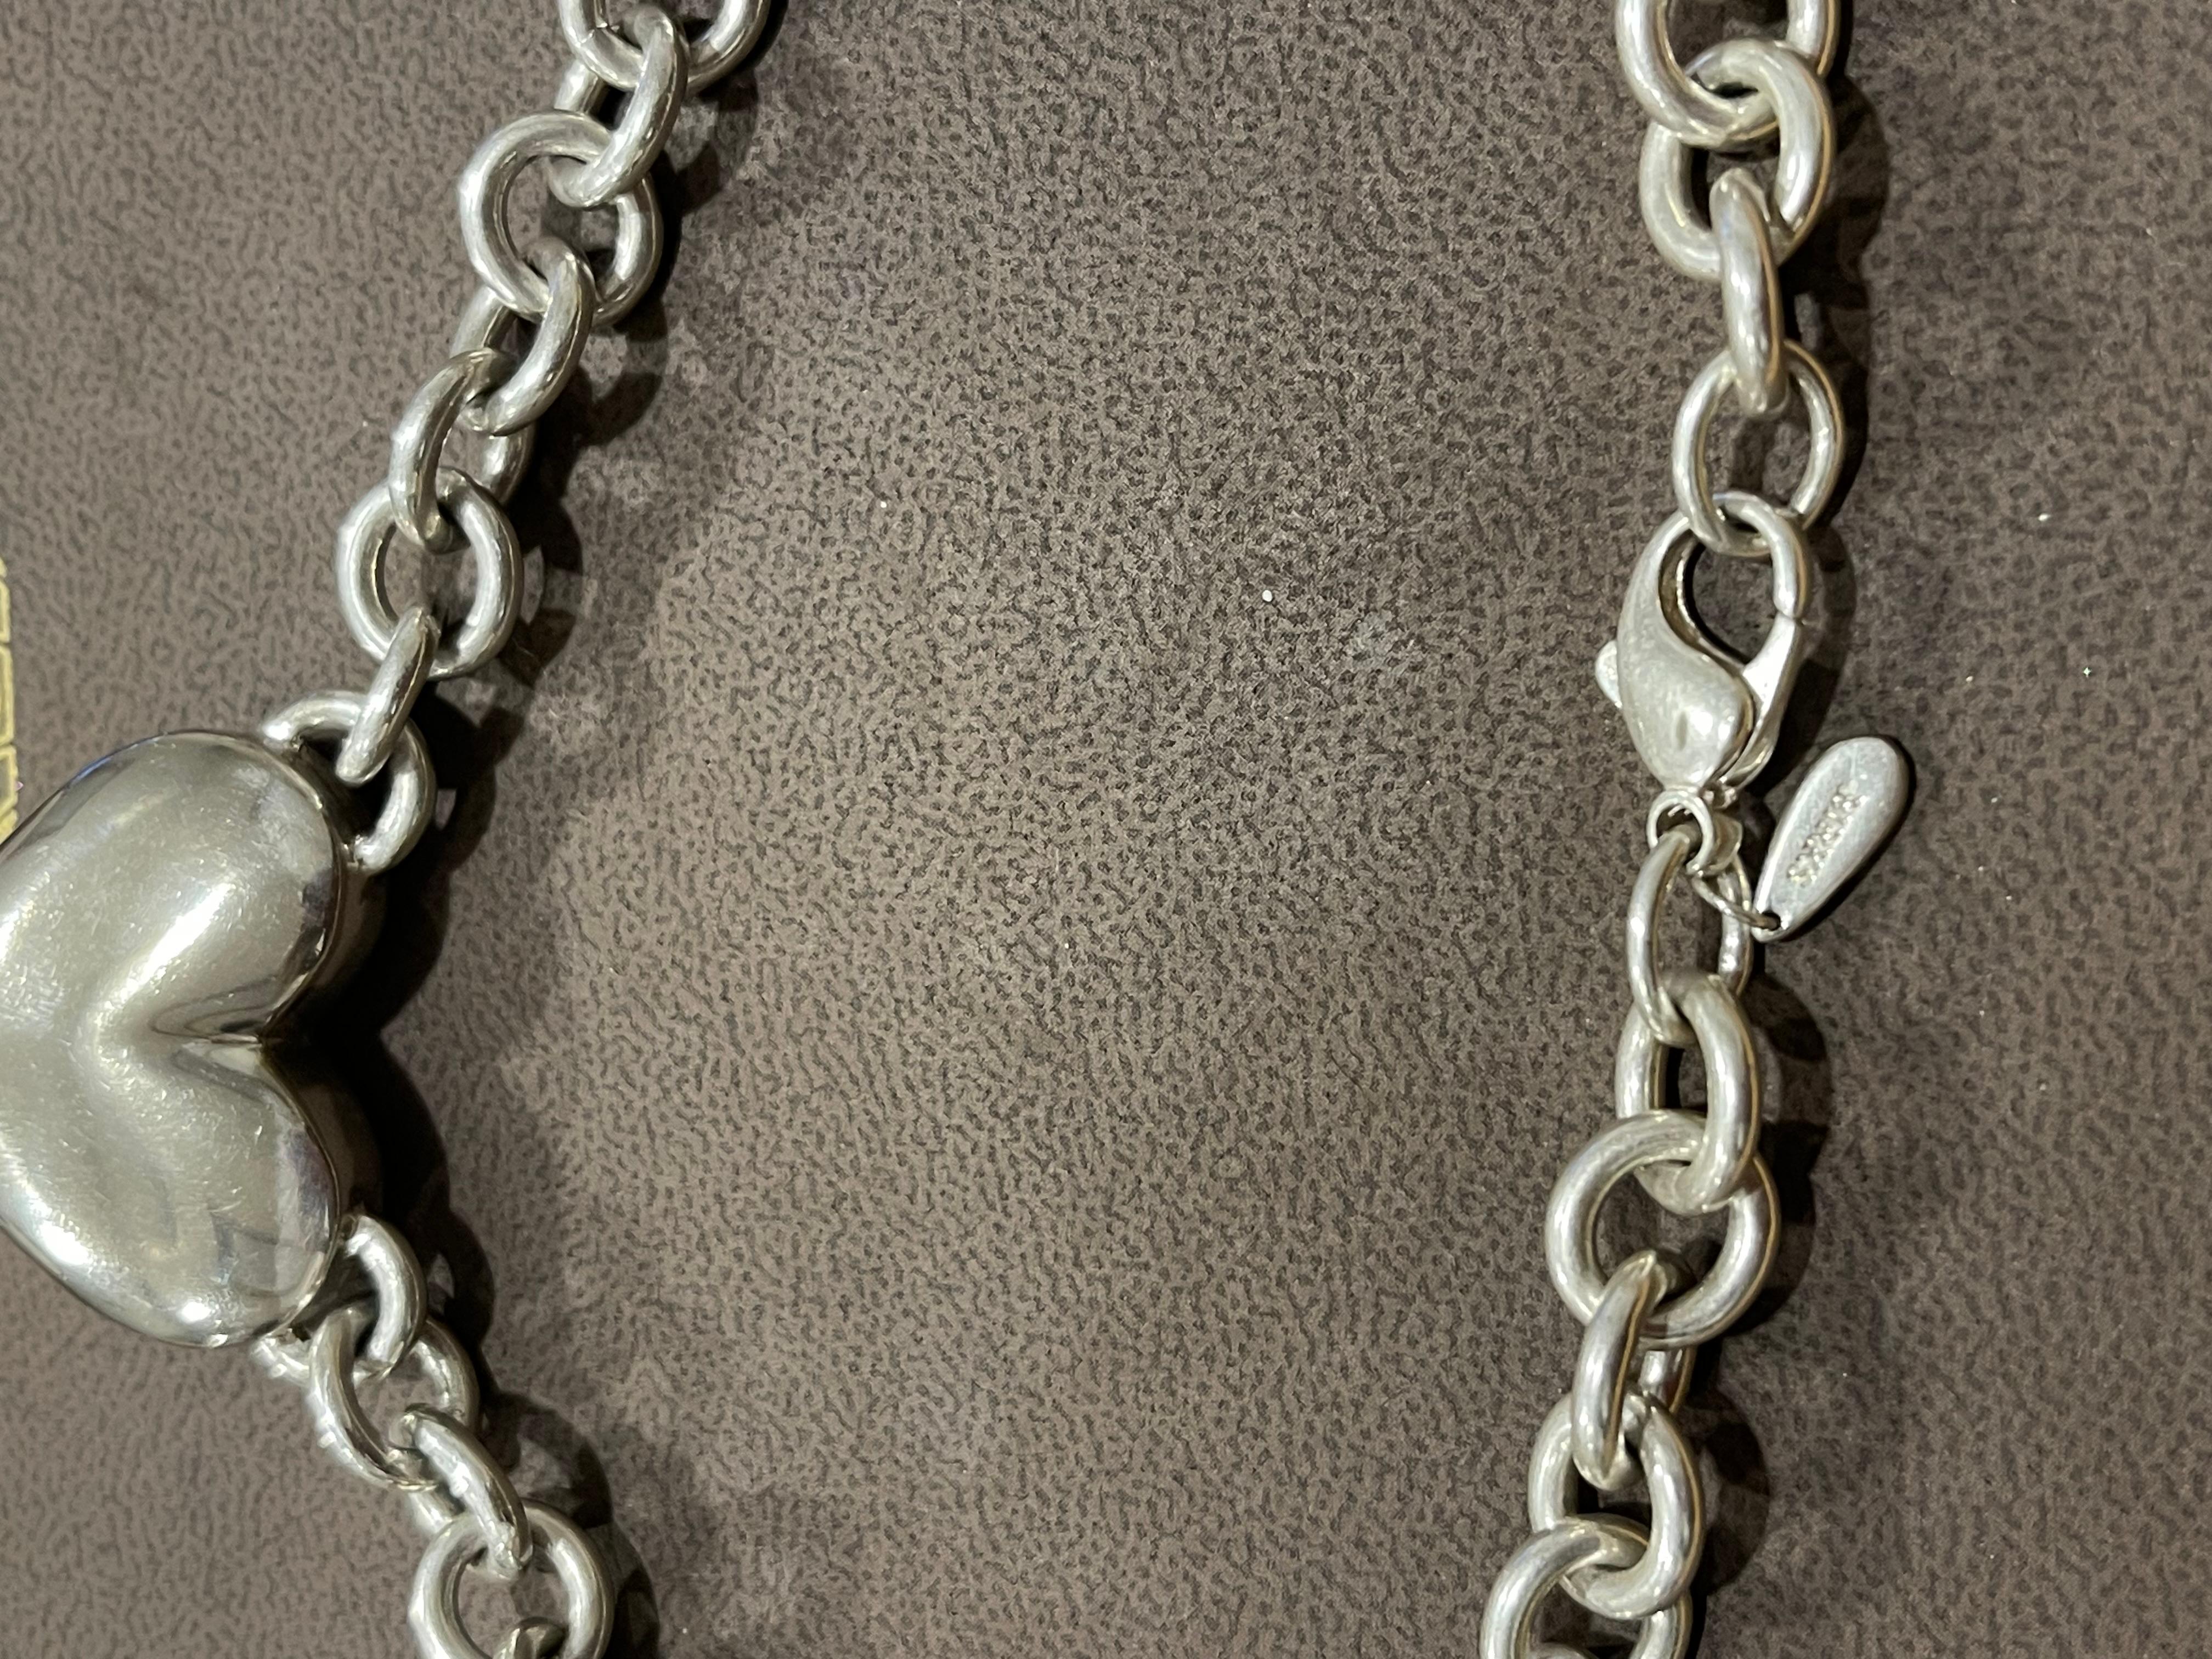 Solitär Herz Sterling Silber Link Halskette 128 Gm 18 